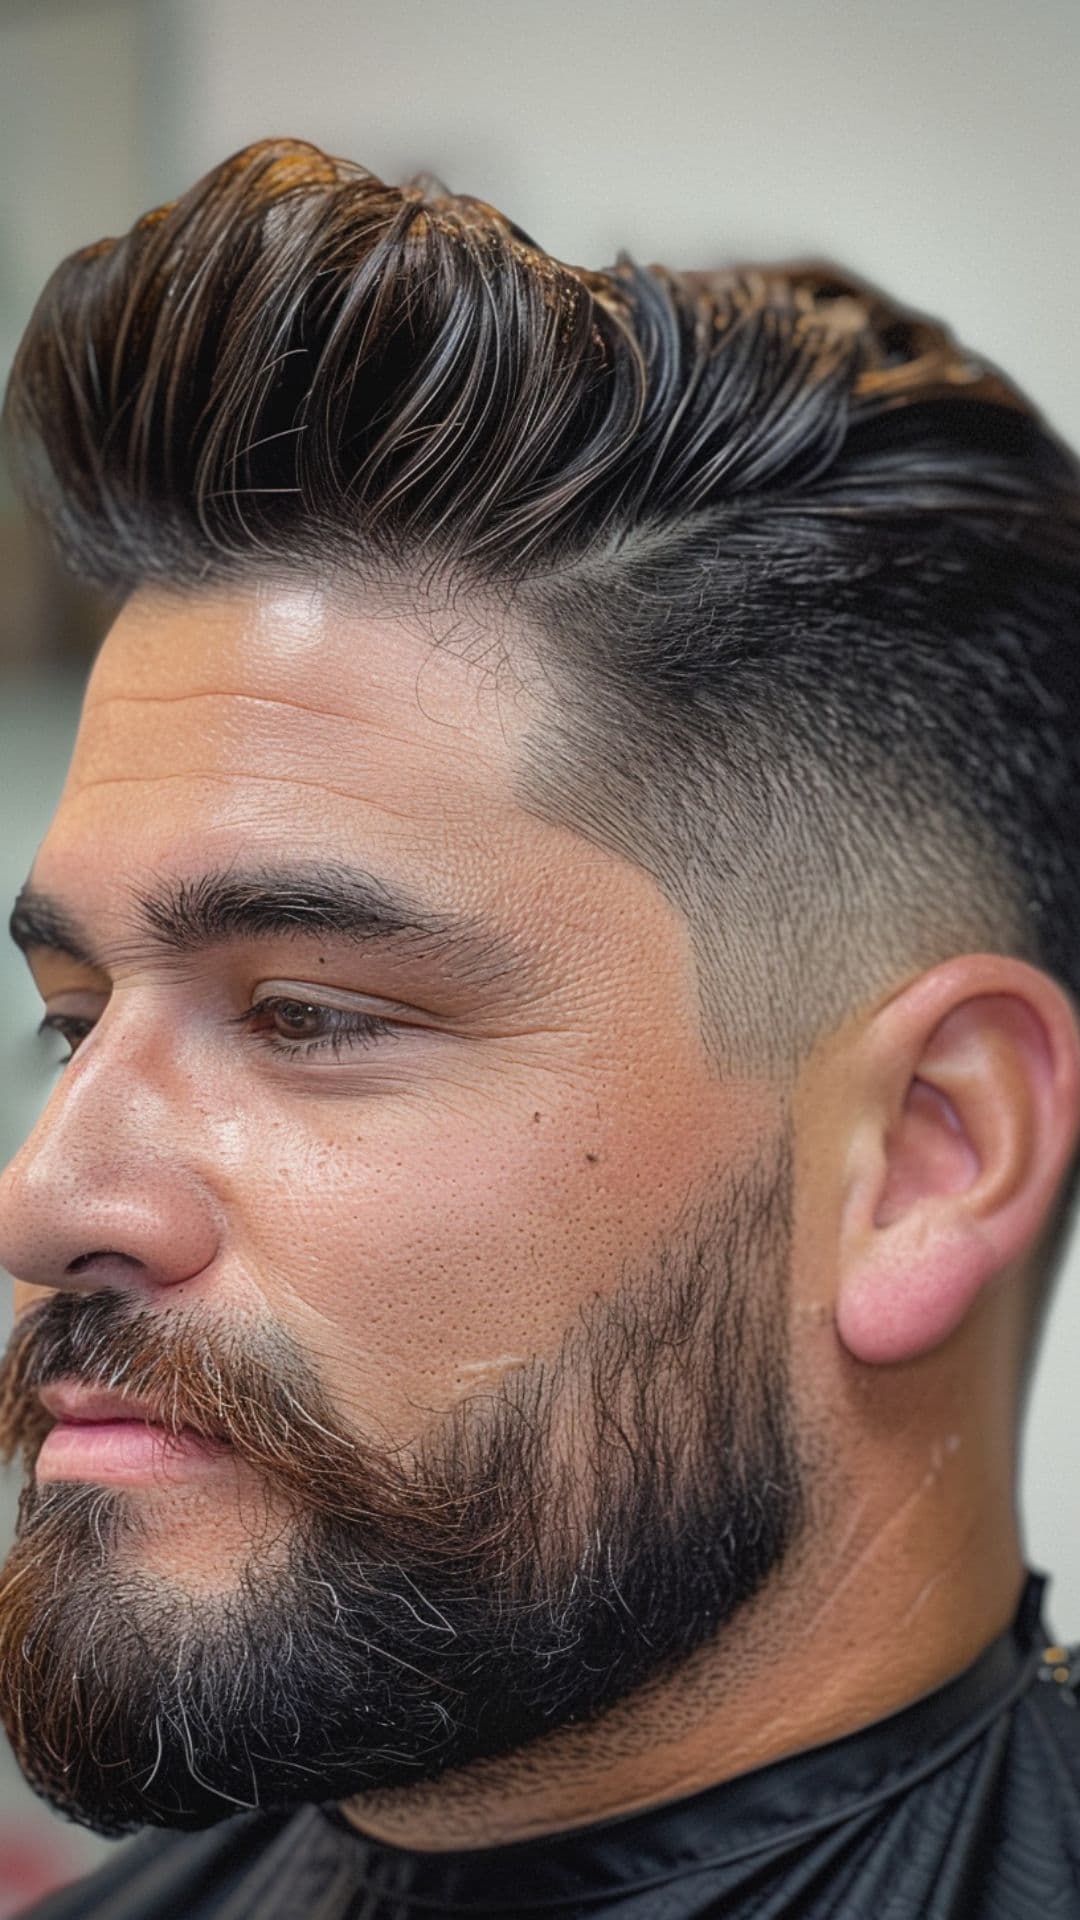 A man modelling a pompadour haircut with beard.